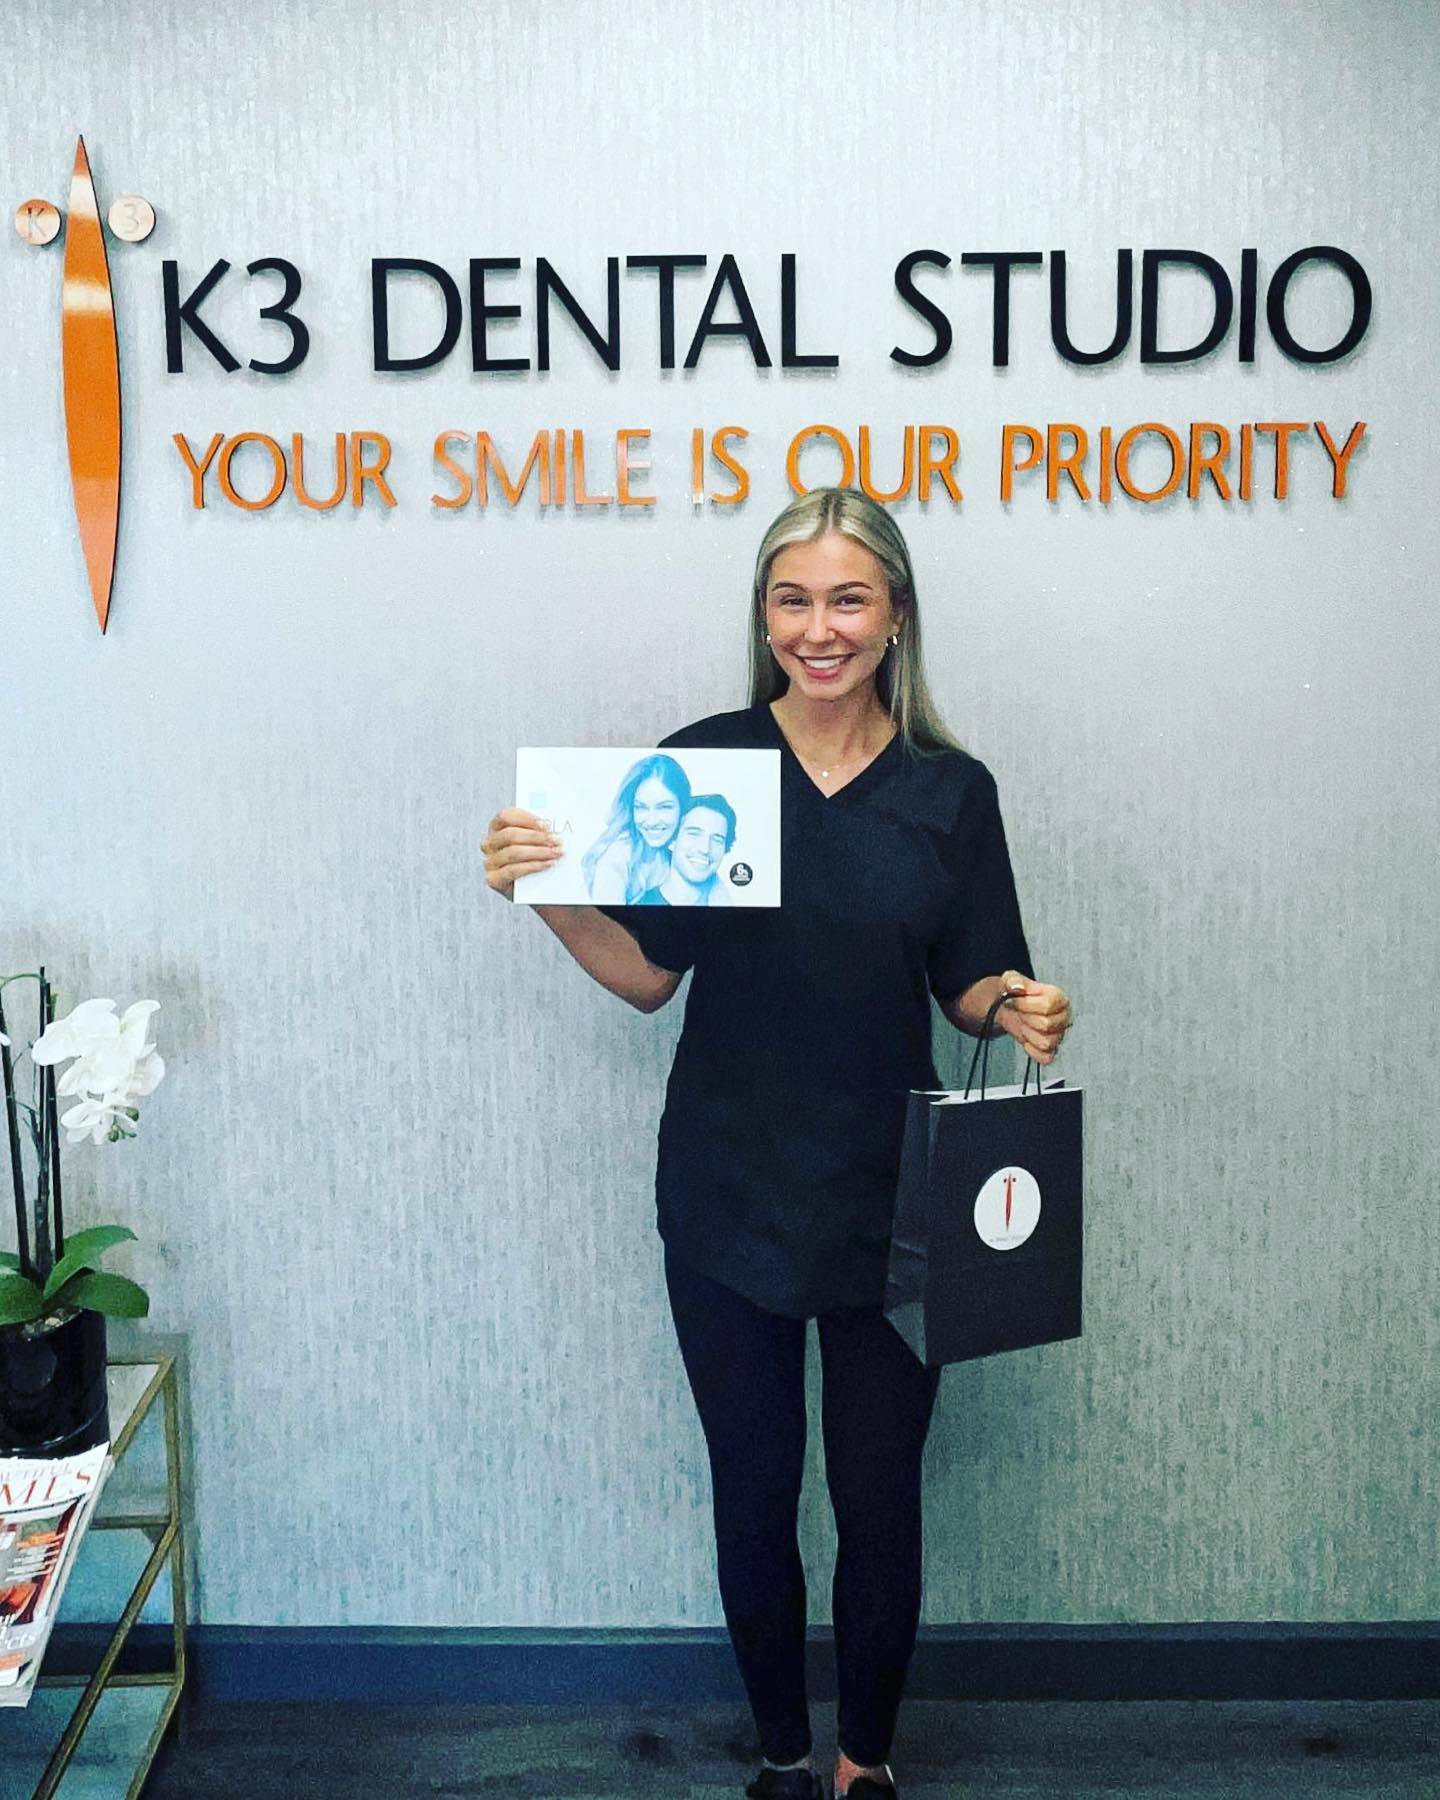 K3 Cosmetic Dental Studio staff